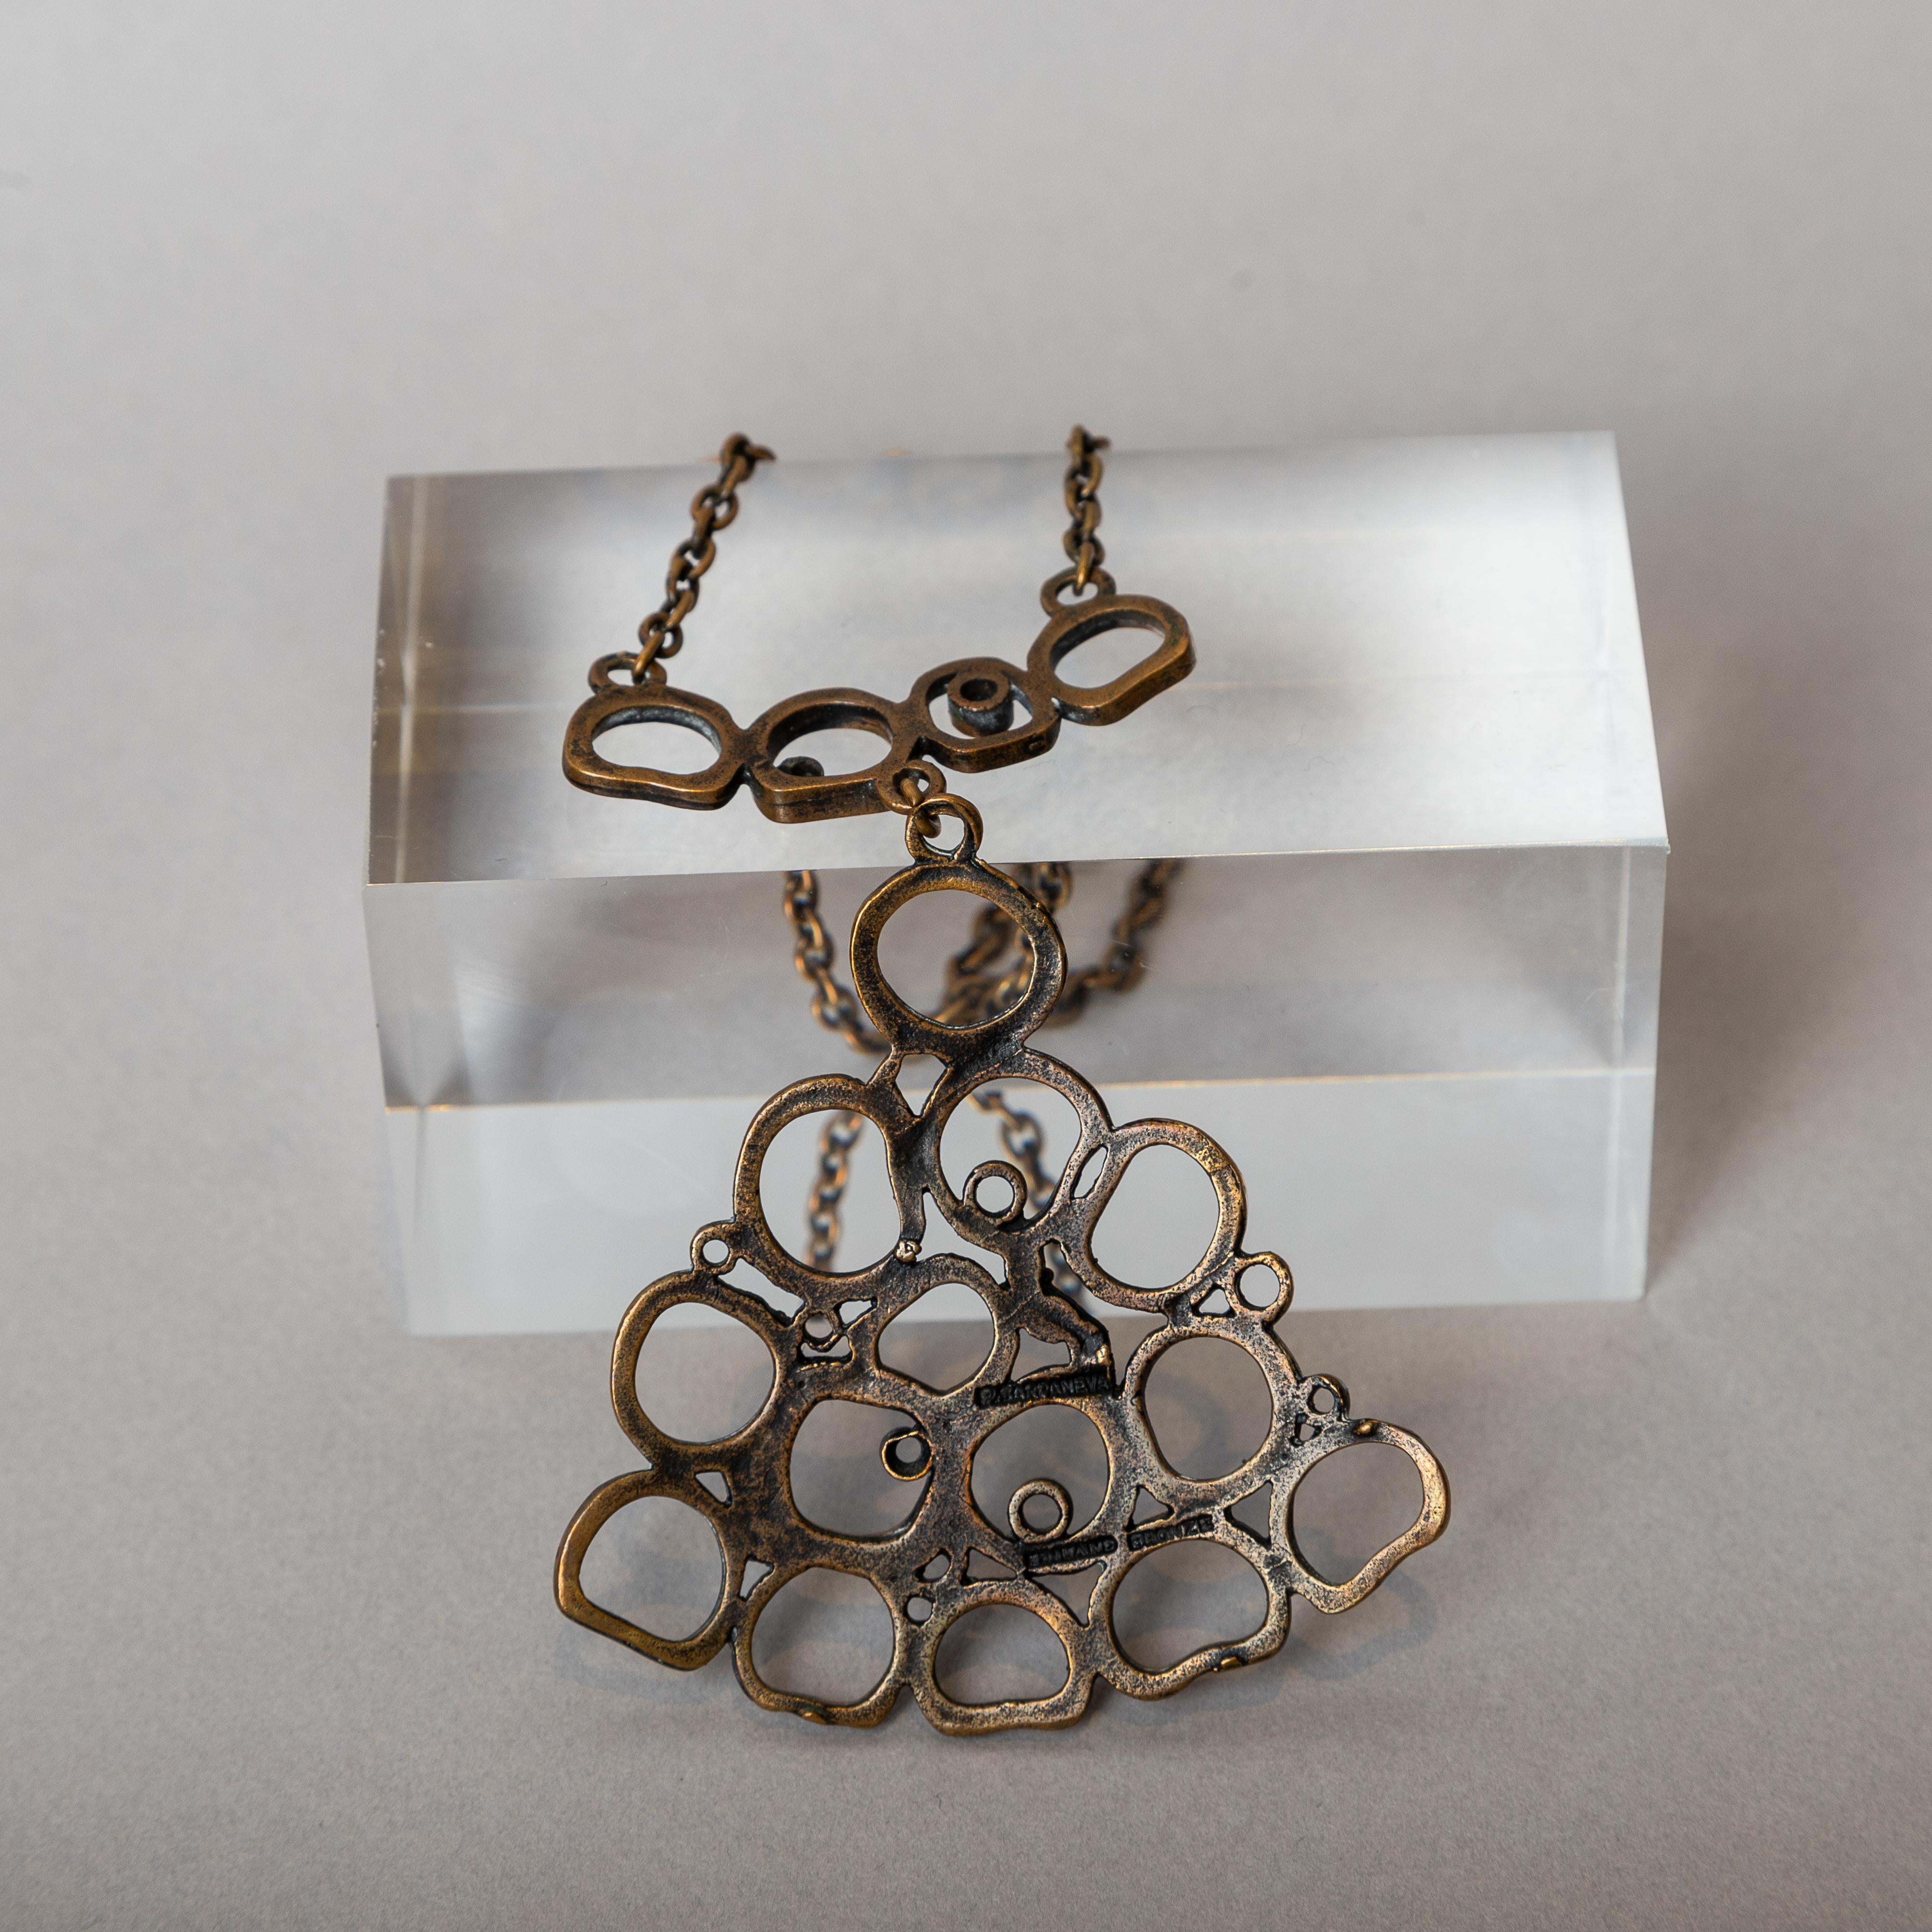 20th century modern Pentii Sarpaneva pendant necklace bronze Scandinavian modern.
Large Unusual Pendant by Pentii Sarpaneva for Turun Hopea Finland. Massiv Patinated bronze.